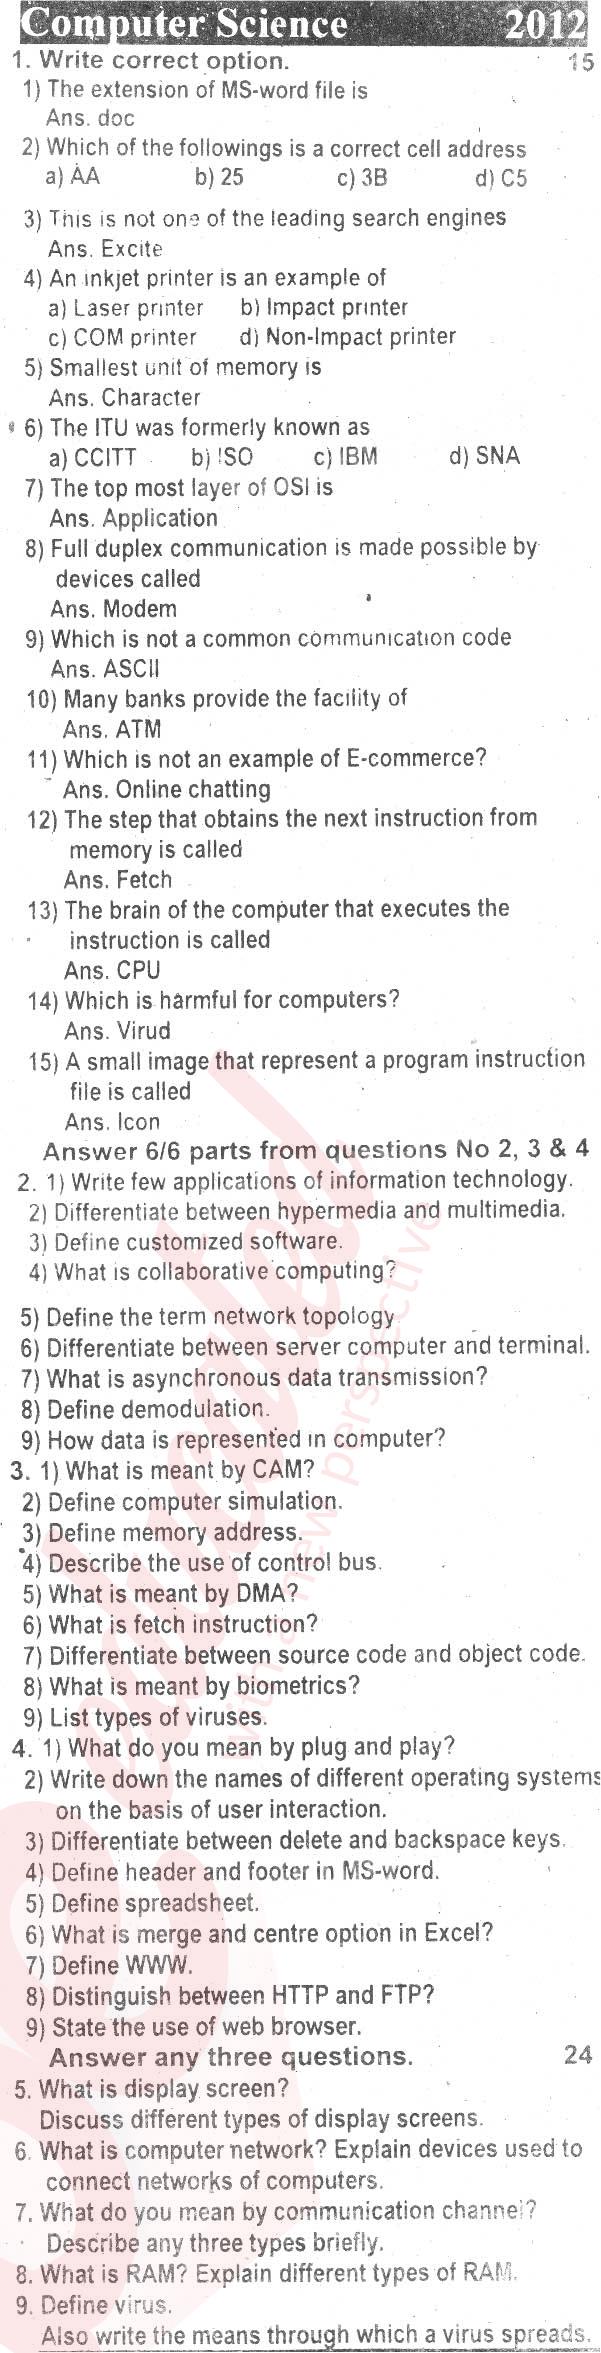 Computer Science ICS Part 1 Past Paper Group 1 BISE Rawalpindi 2012